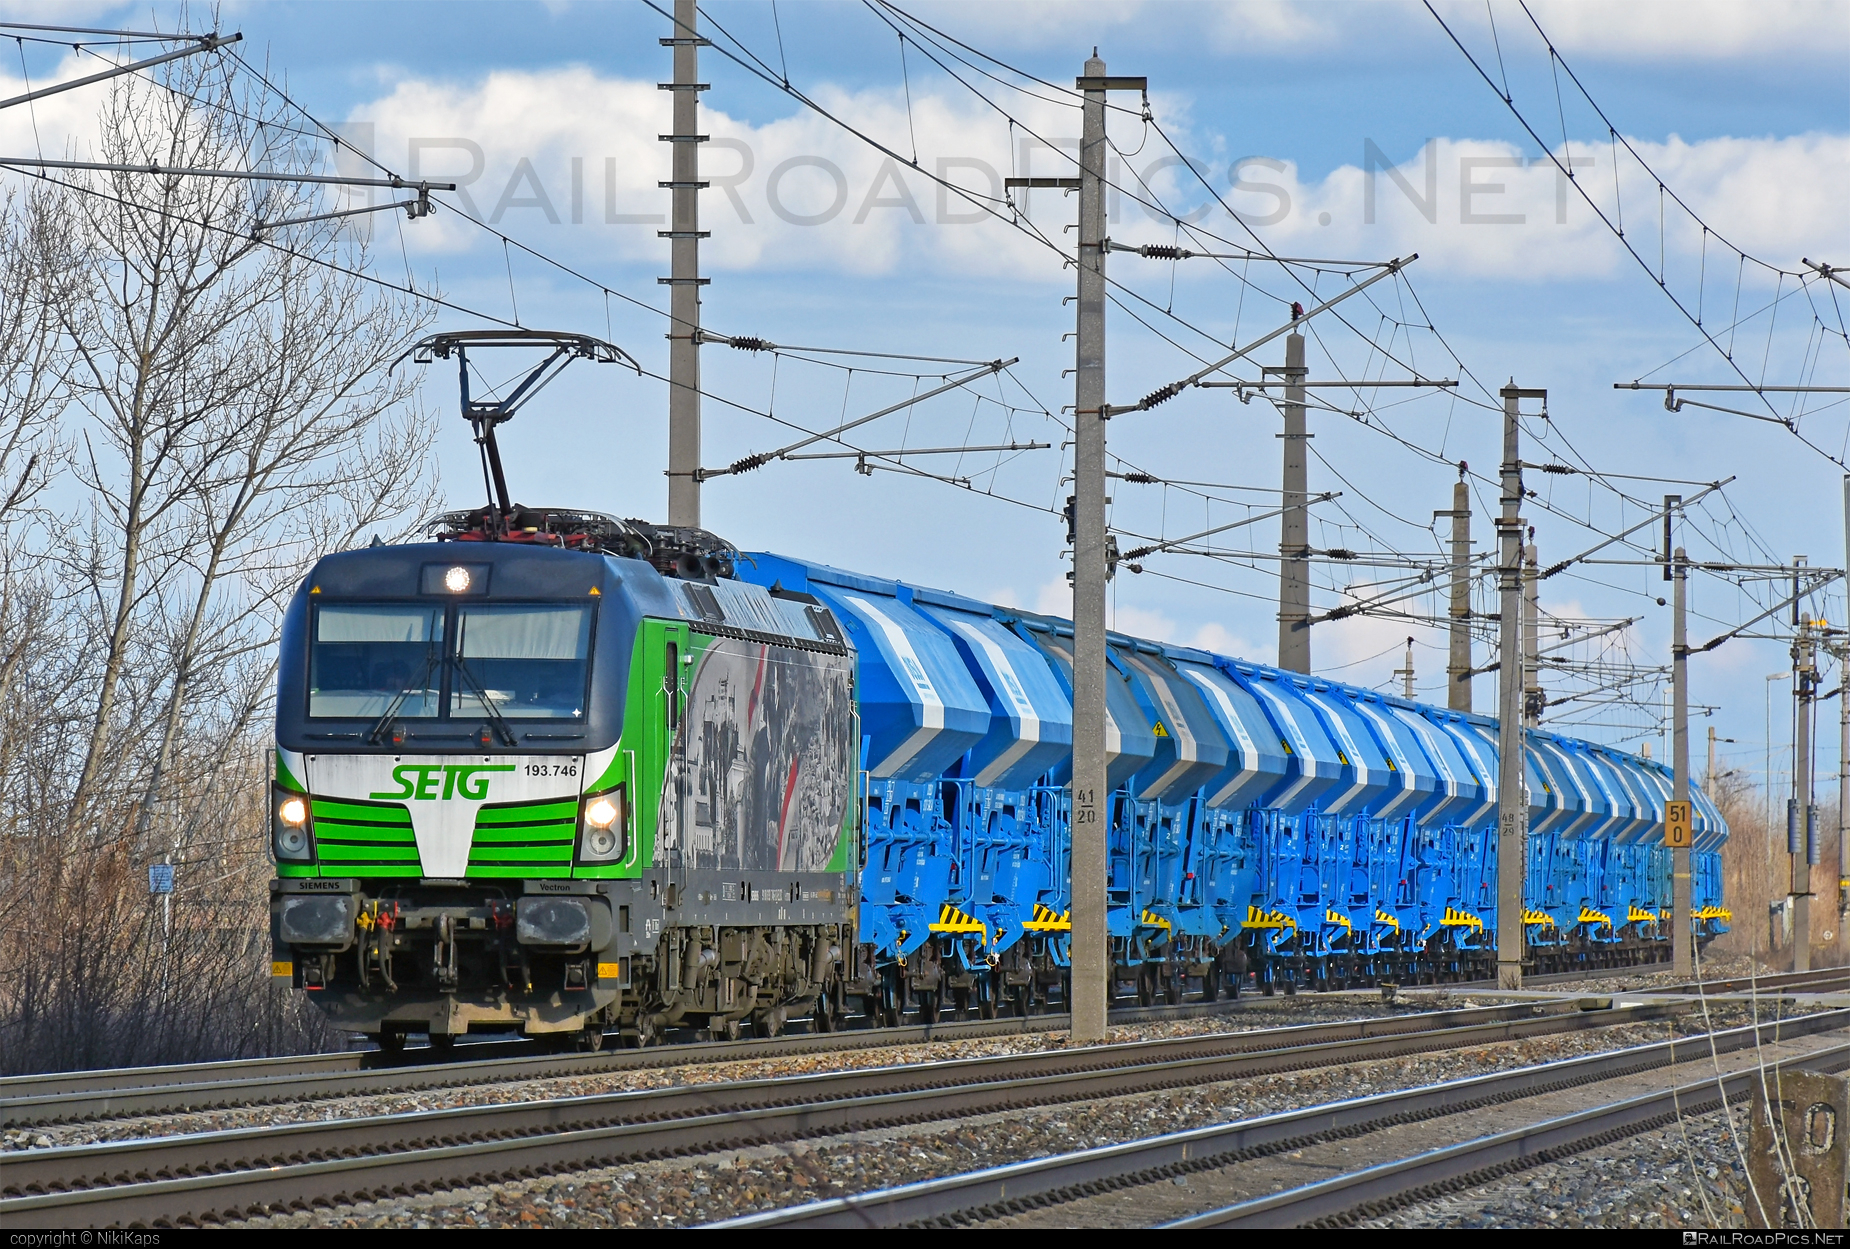 Siemens Vectron MS - 193 746 operated by Salzburger Eisenbahn Transportlogistik GmbH #SalzburgerEisenbahnTransportlogistik #SalzburgerEisenbahnTransportlogistikGmbH #duslo #ell #ellgermany #eloc #europeanlocomotiveleasing #hopperwagon #setg #siemens #siemensVectron #siemensVectronMS #vectron #vectronMS